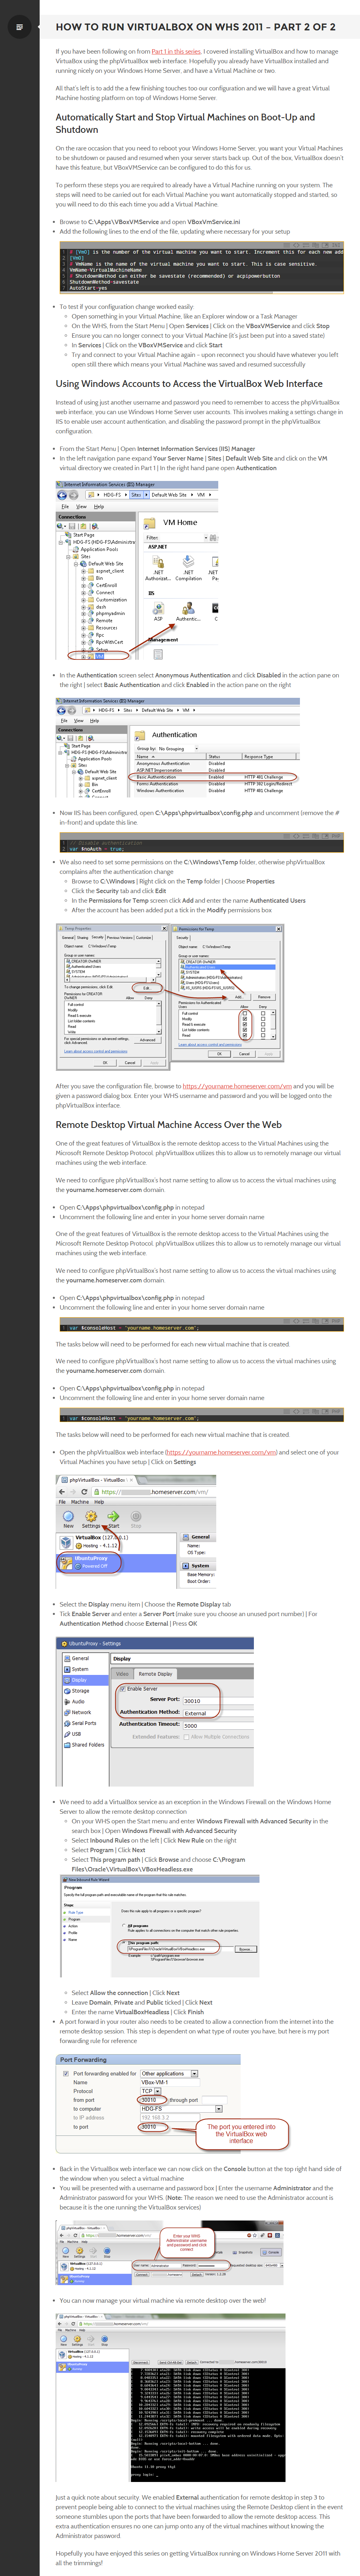 How To Run VirtualBox on WHS 2001 - Part 2